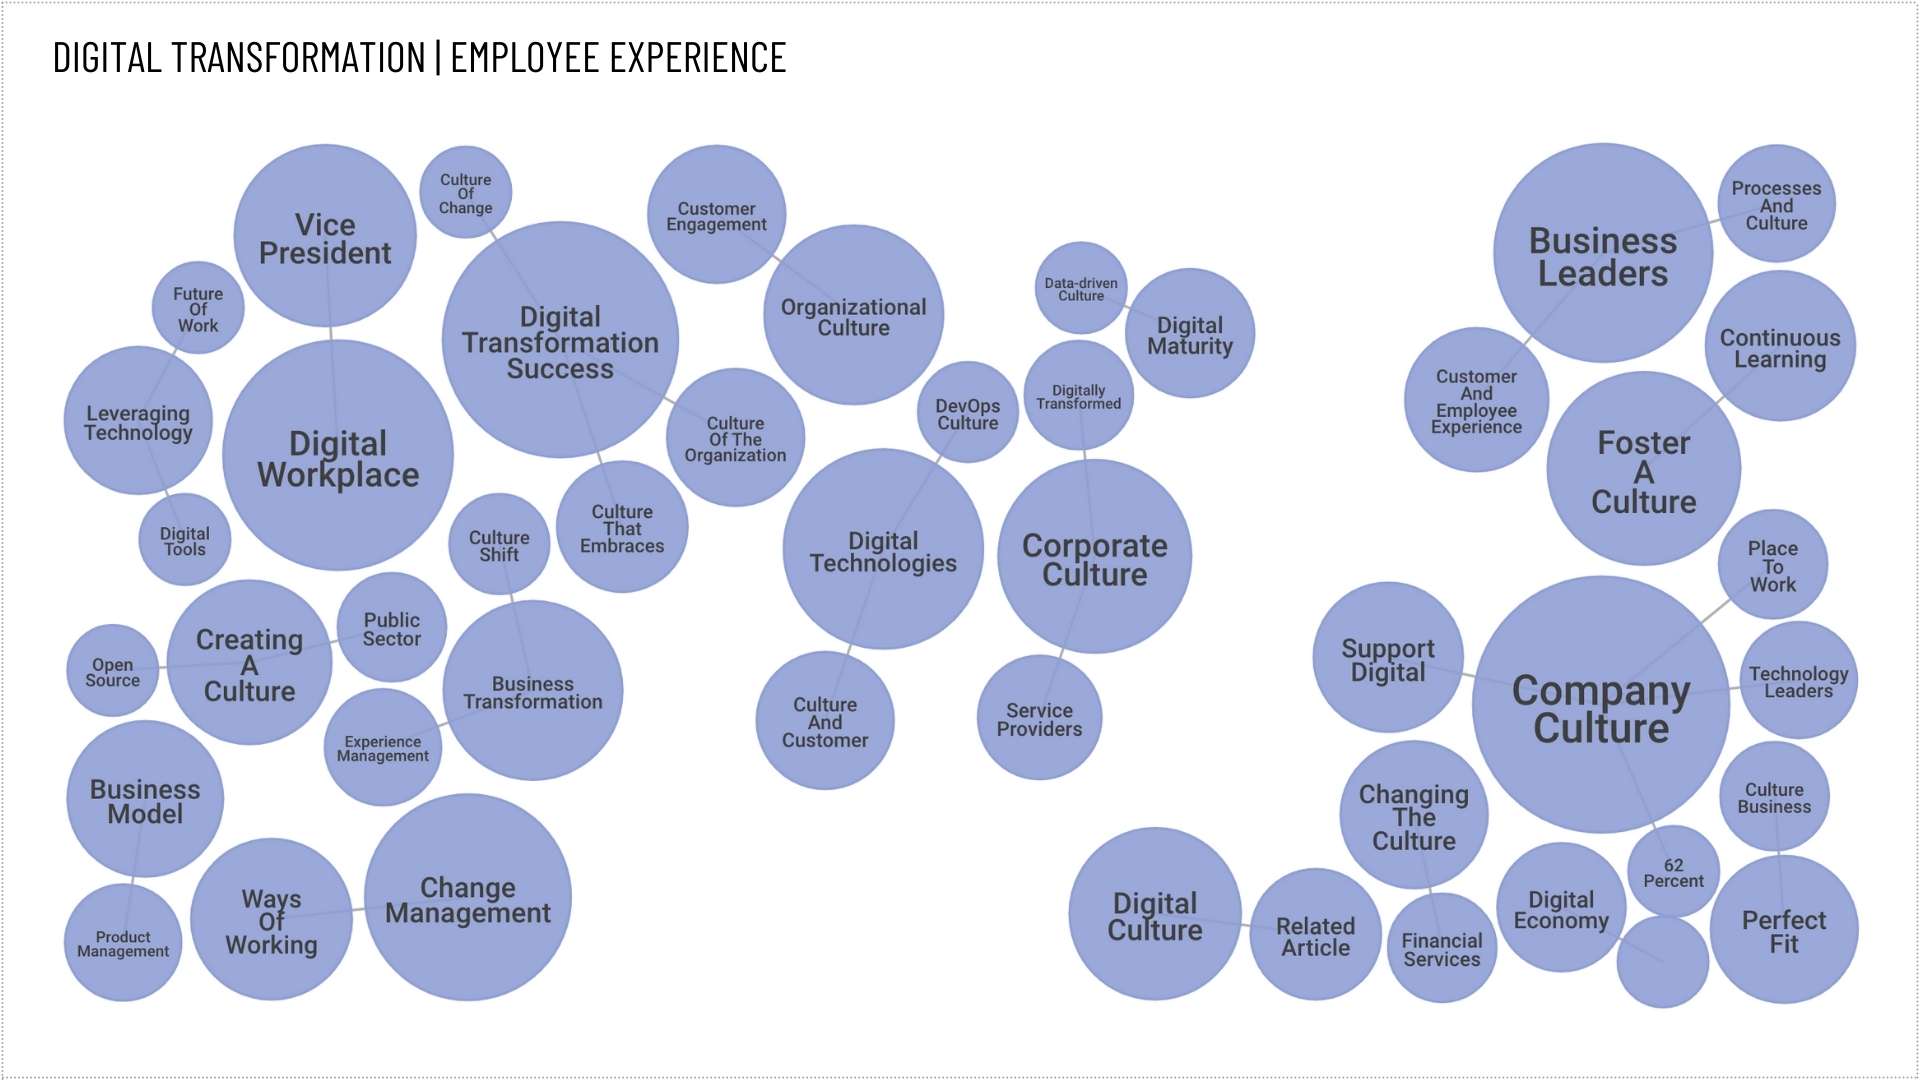 Employee Experience Analysis of Digital Transformation Topics